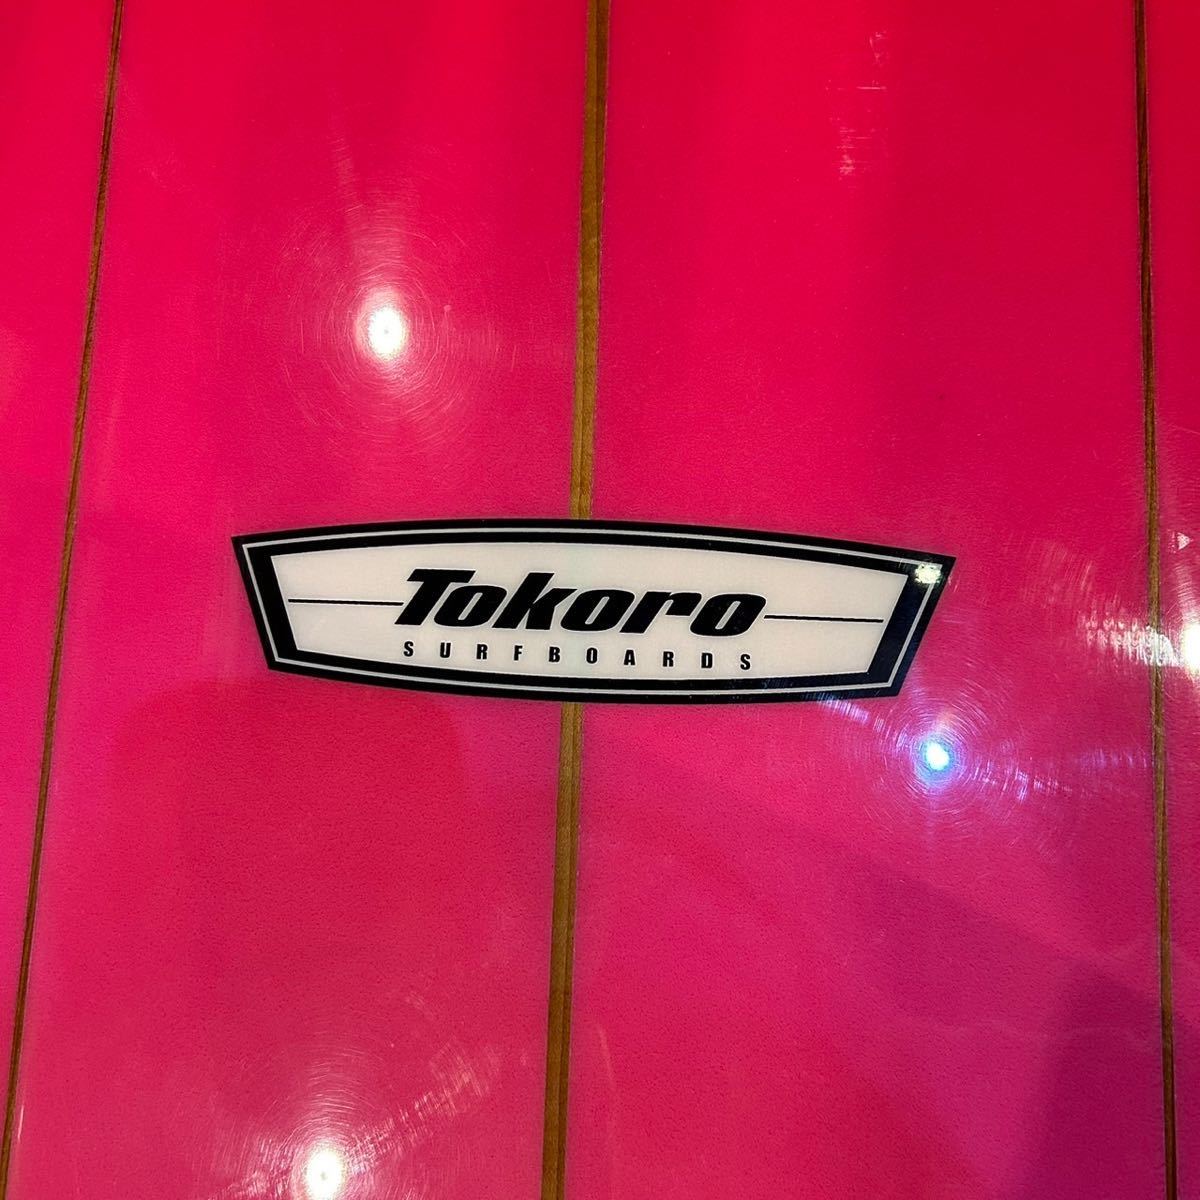  прекрасный товар б/у Tokoro surfboardstokoro mid length доска для серфинга Гаваи 